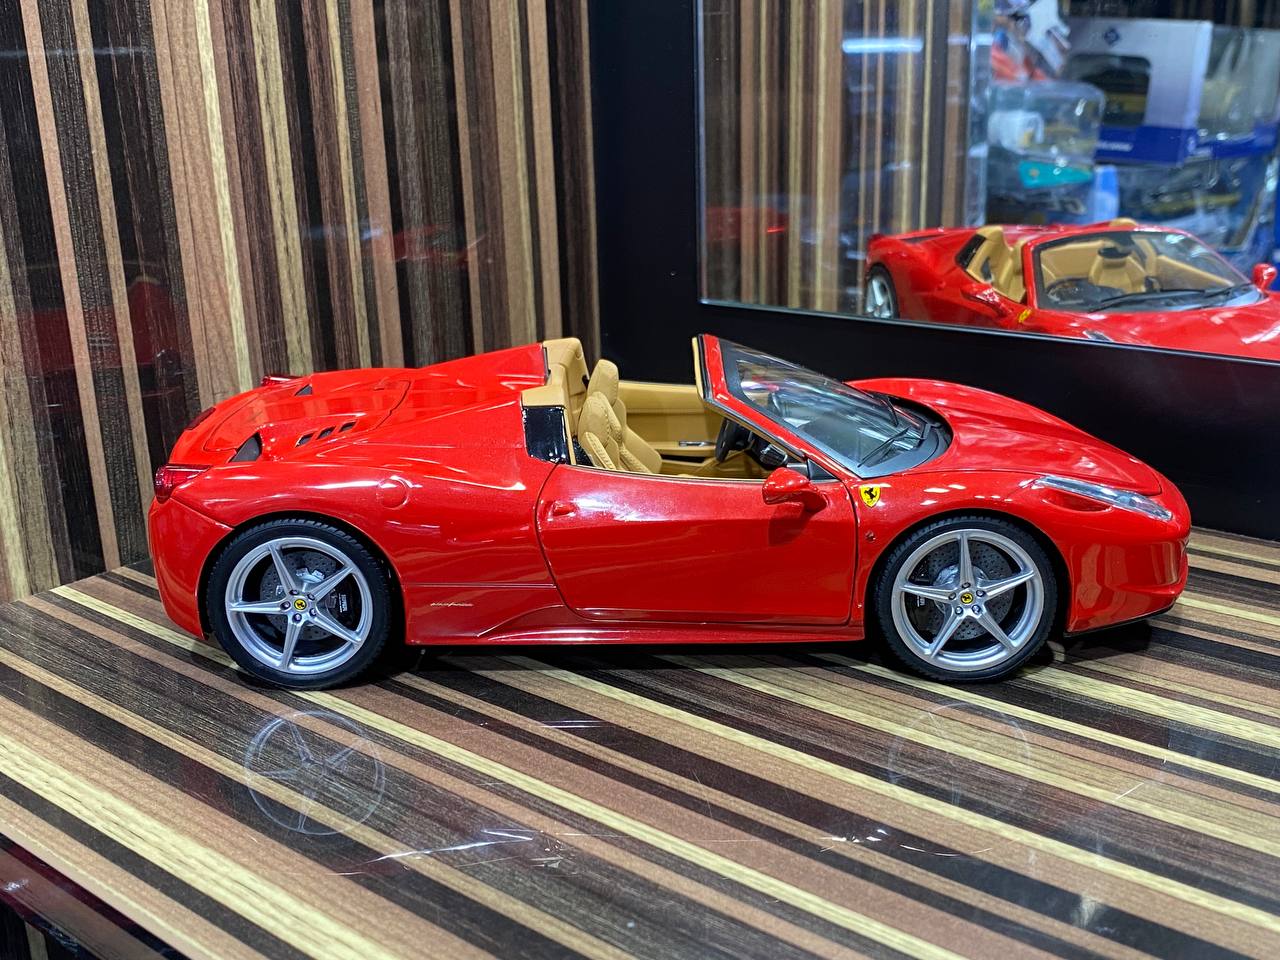 1/18 metal Diecast HotWheels Ferrari 458 Spider Red - Full Opening